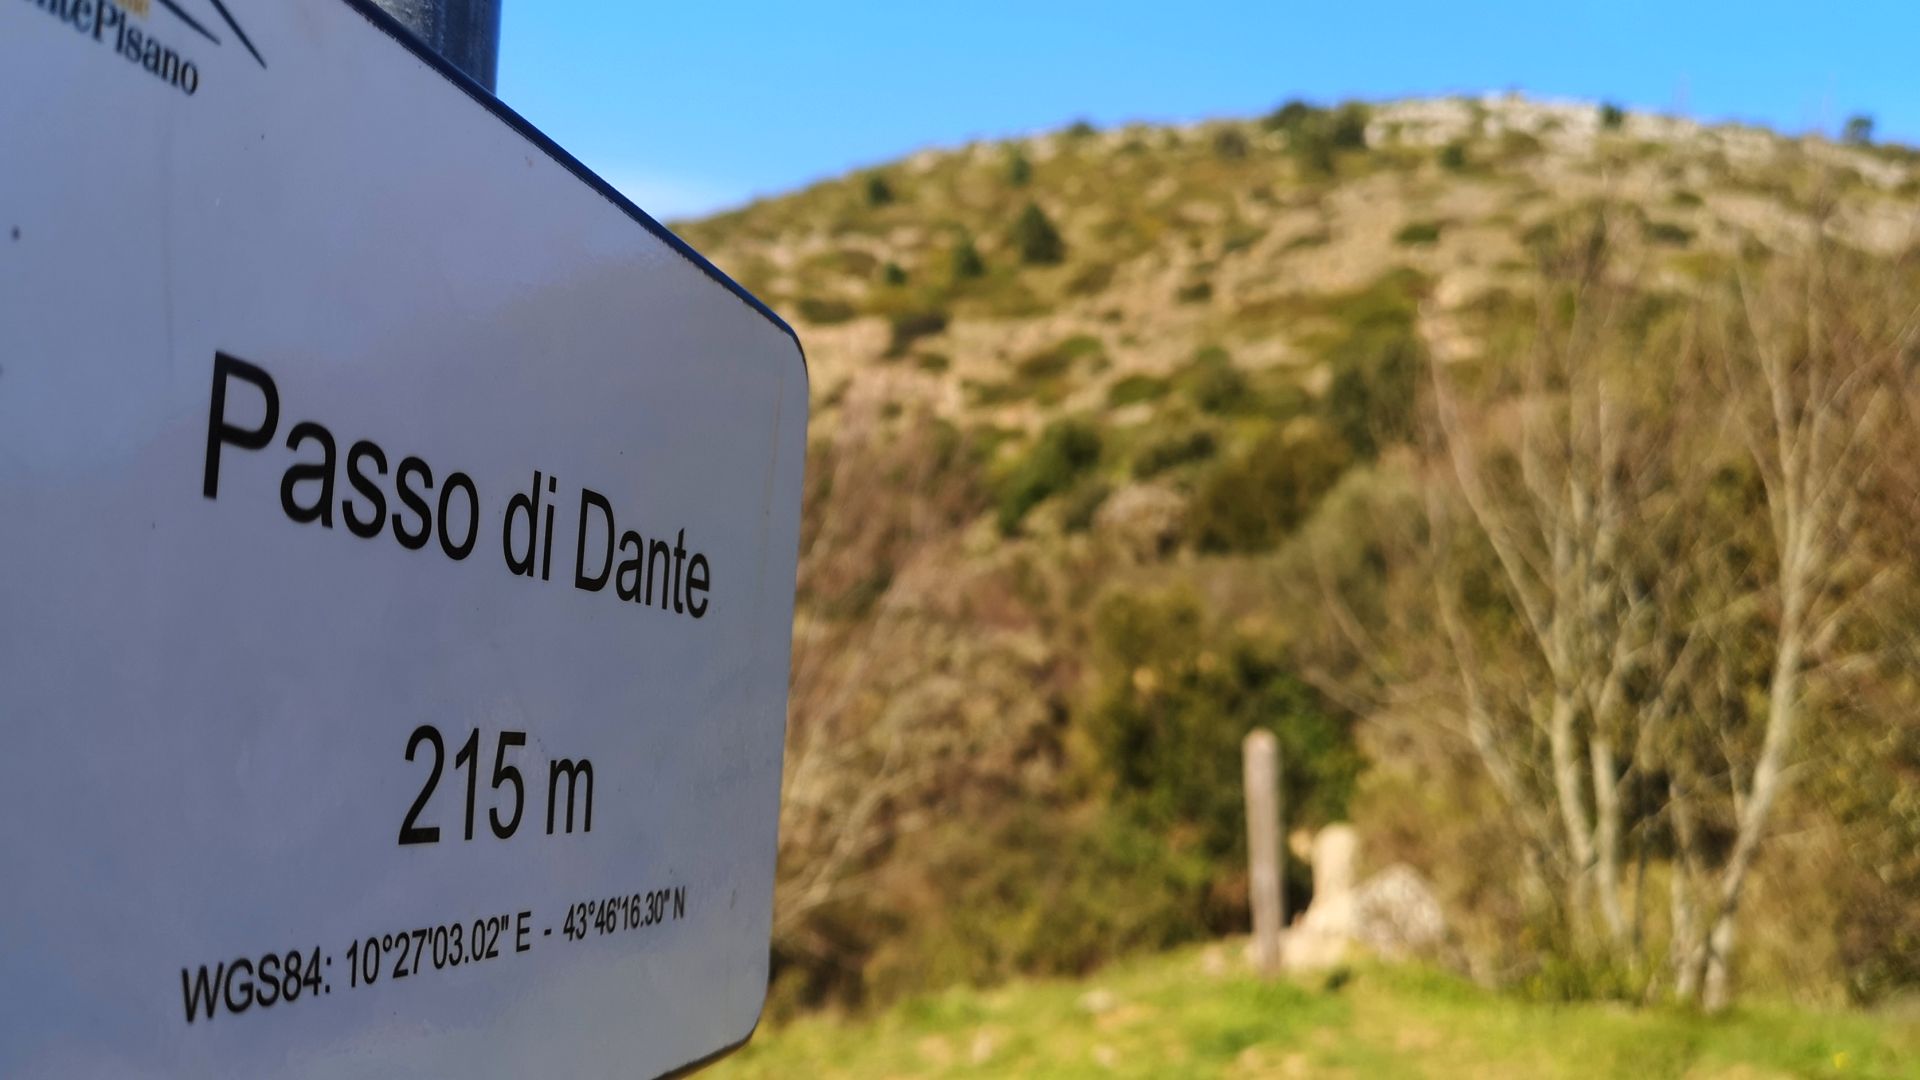 Dante's Pass